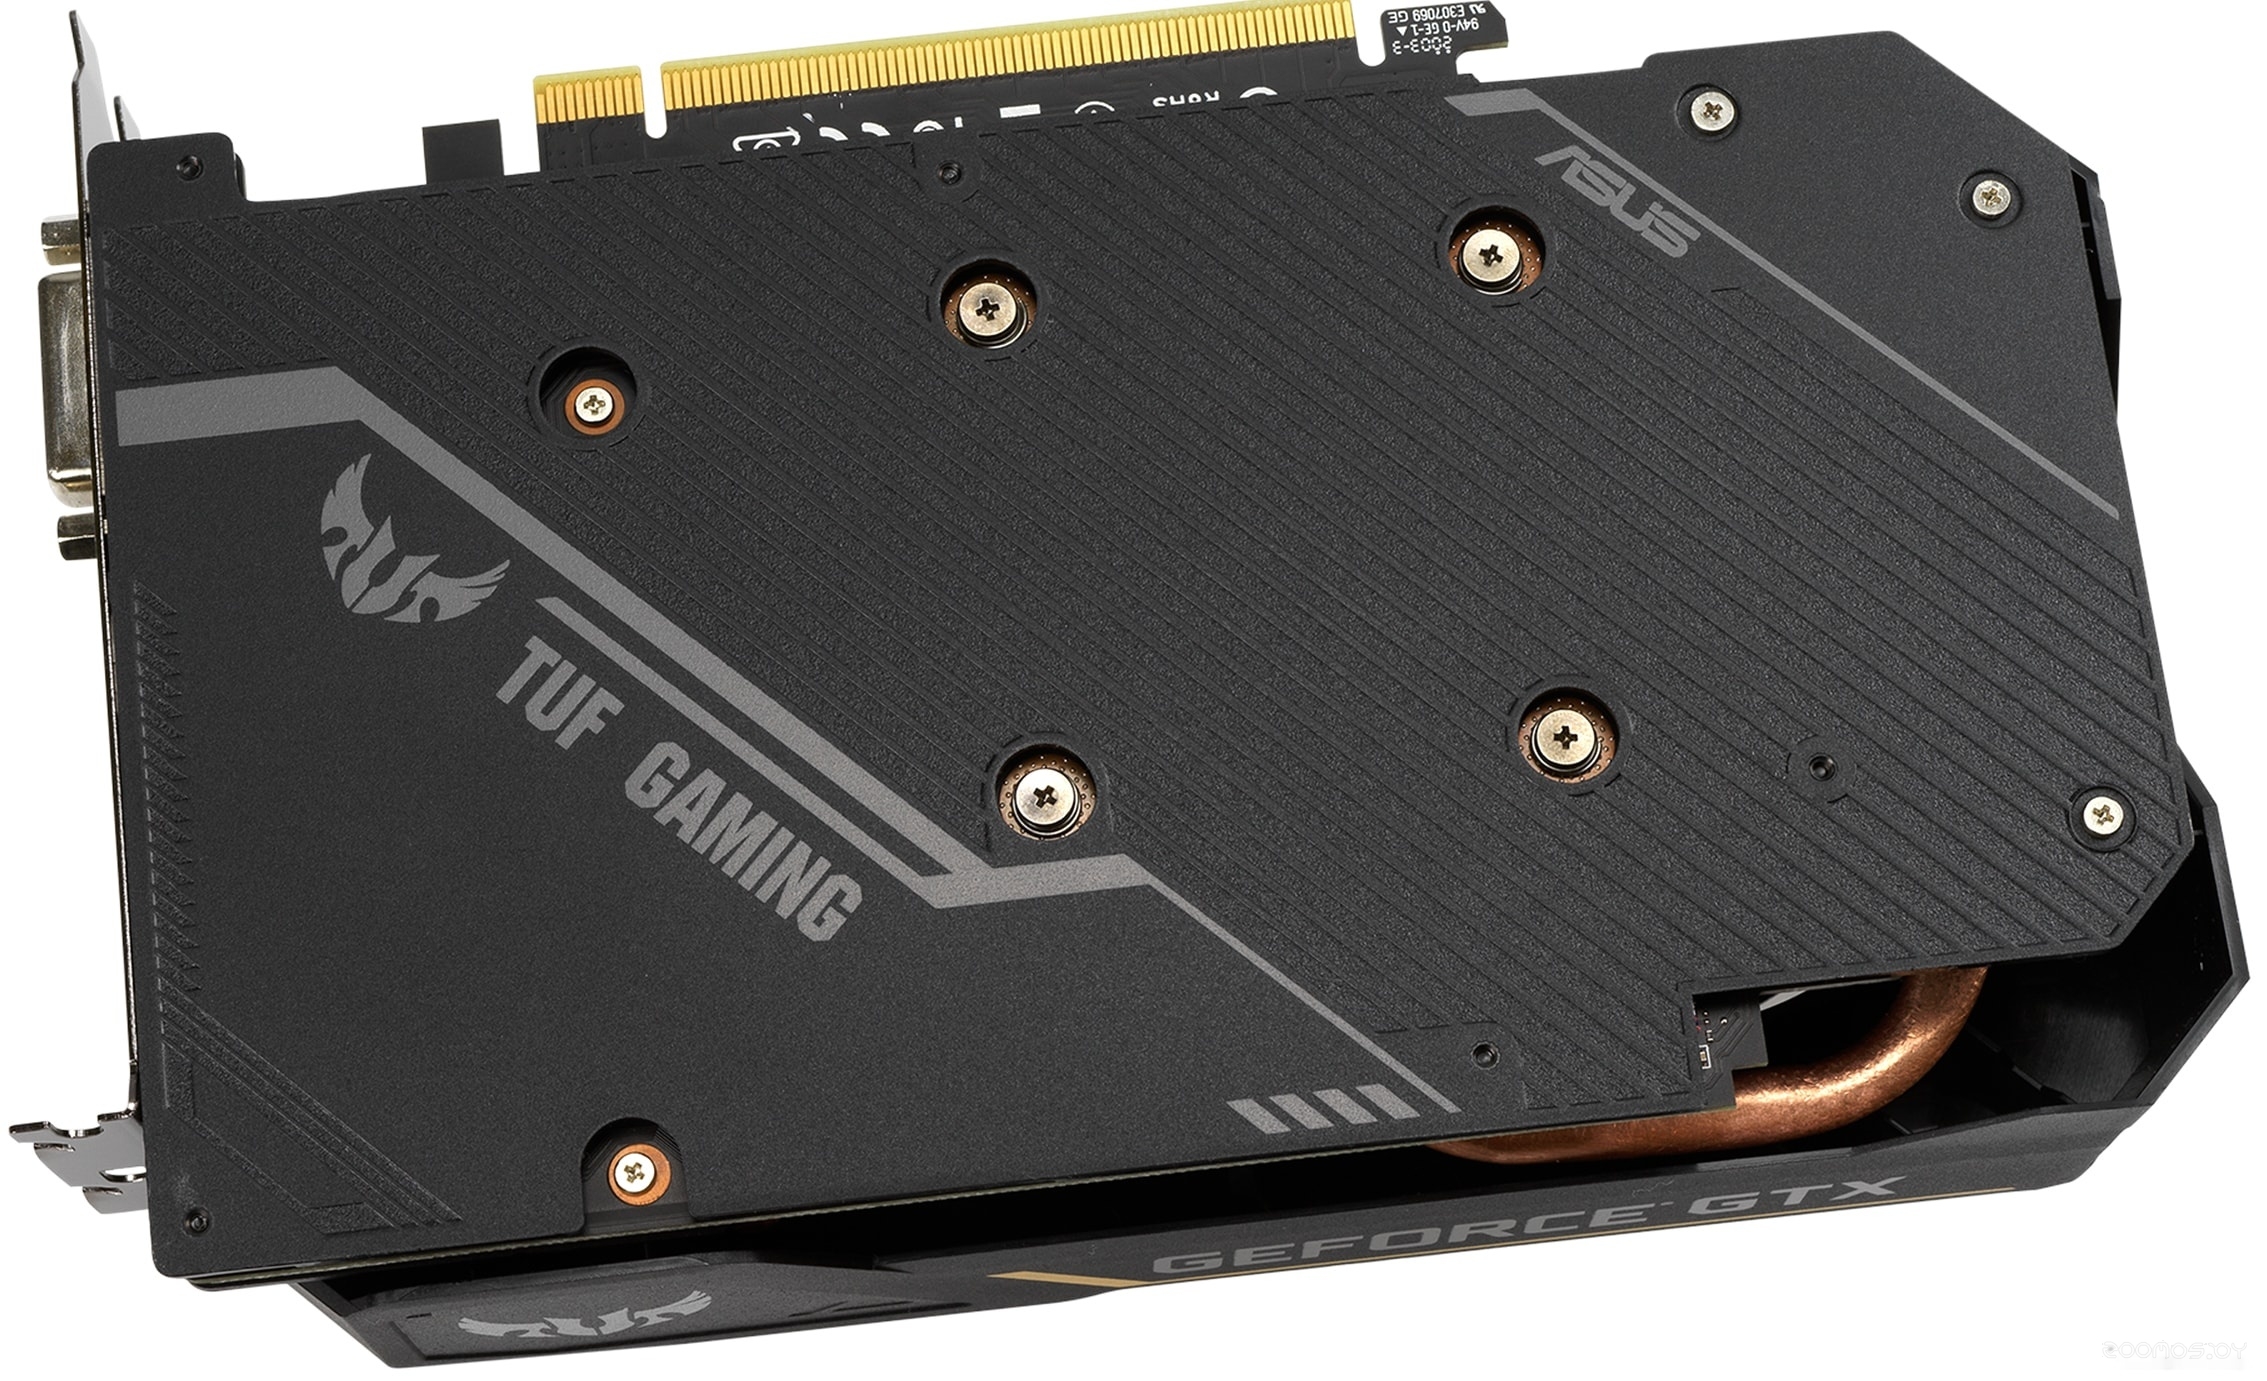  Asus GeForce GTX 1650 4GB GDDR6 TUF-GTX1650-4GD6-GAMING     